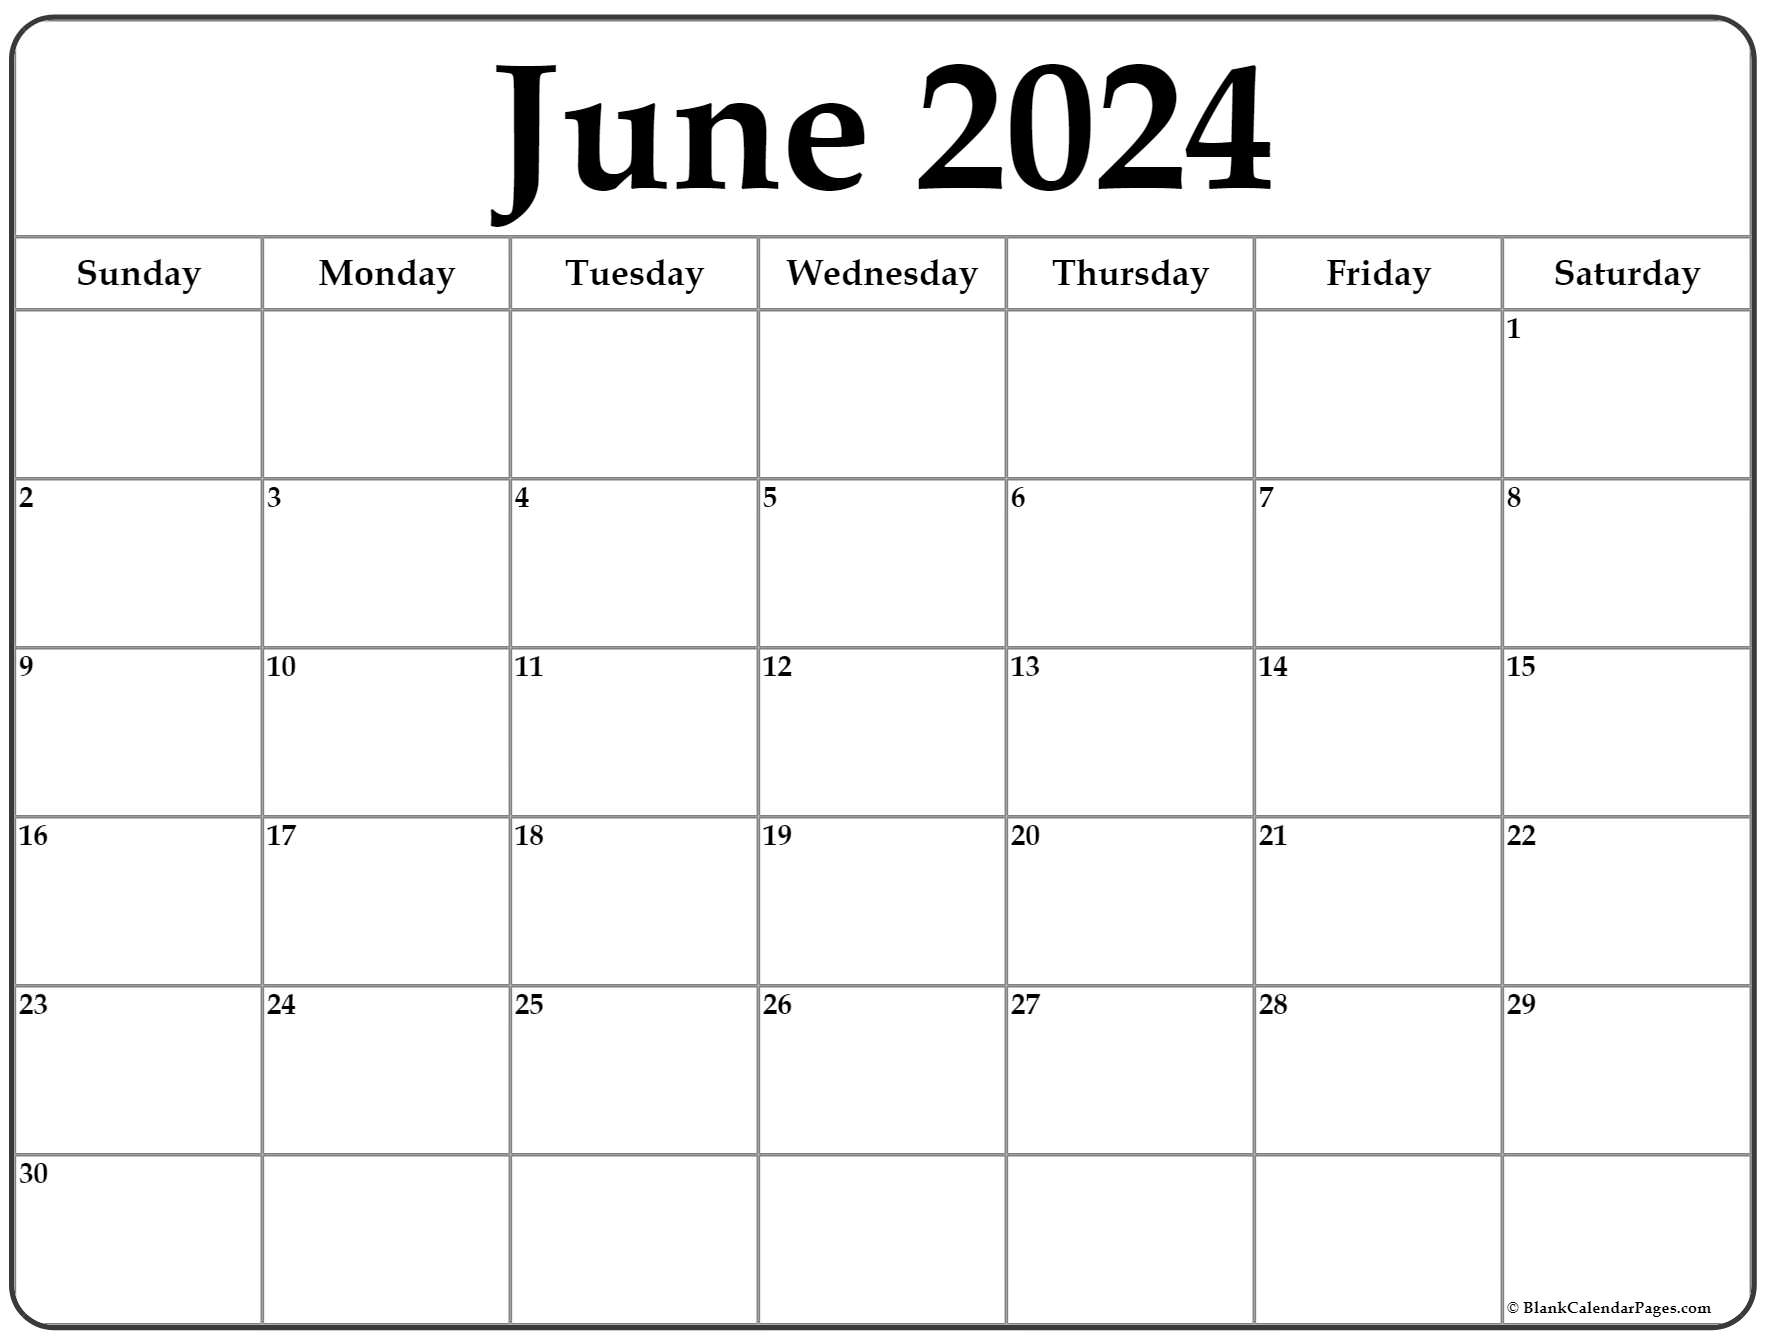 June Calendar Template 2022 June 2022 Calendar | Free Printable Calendar Templates